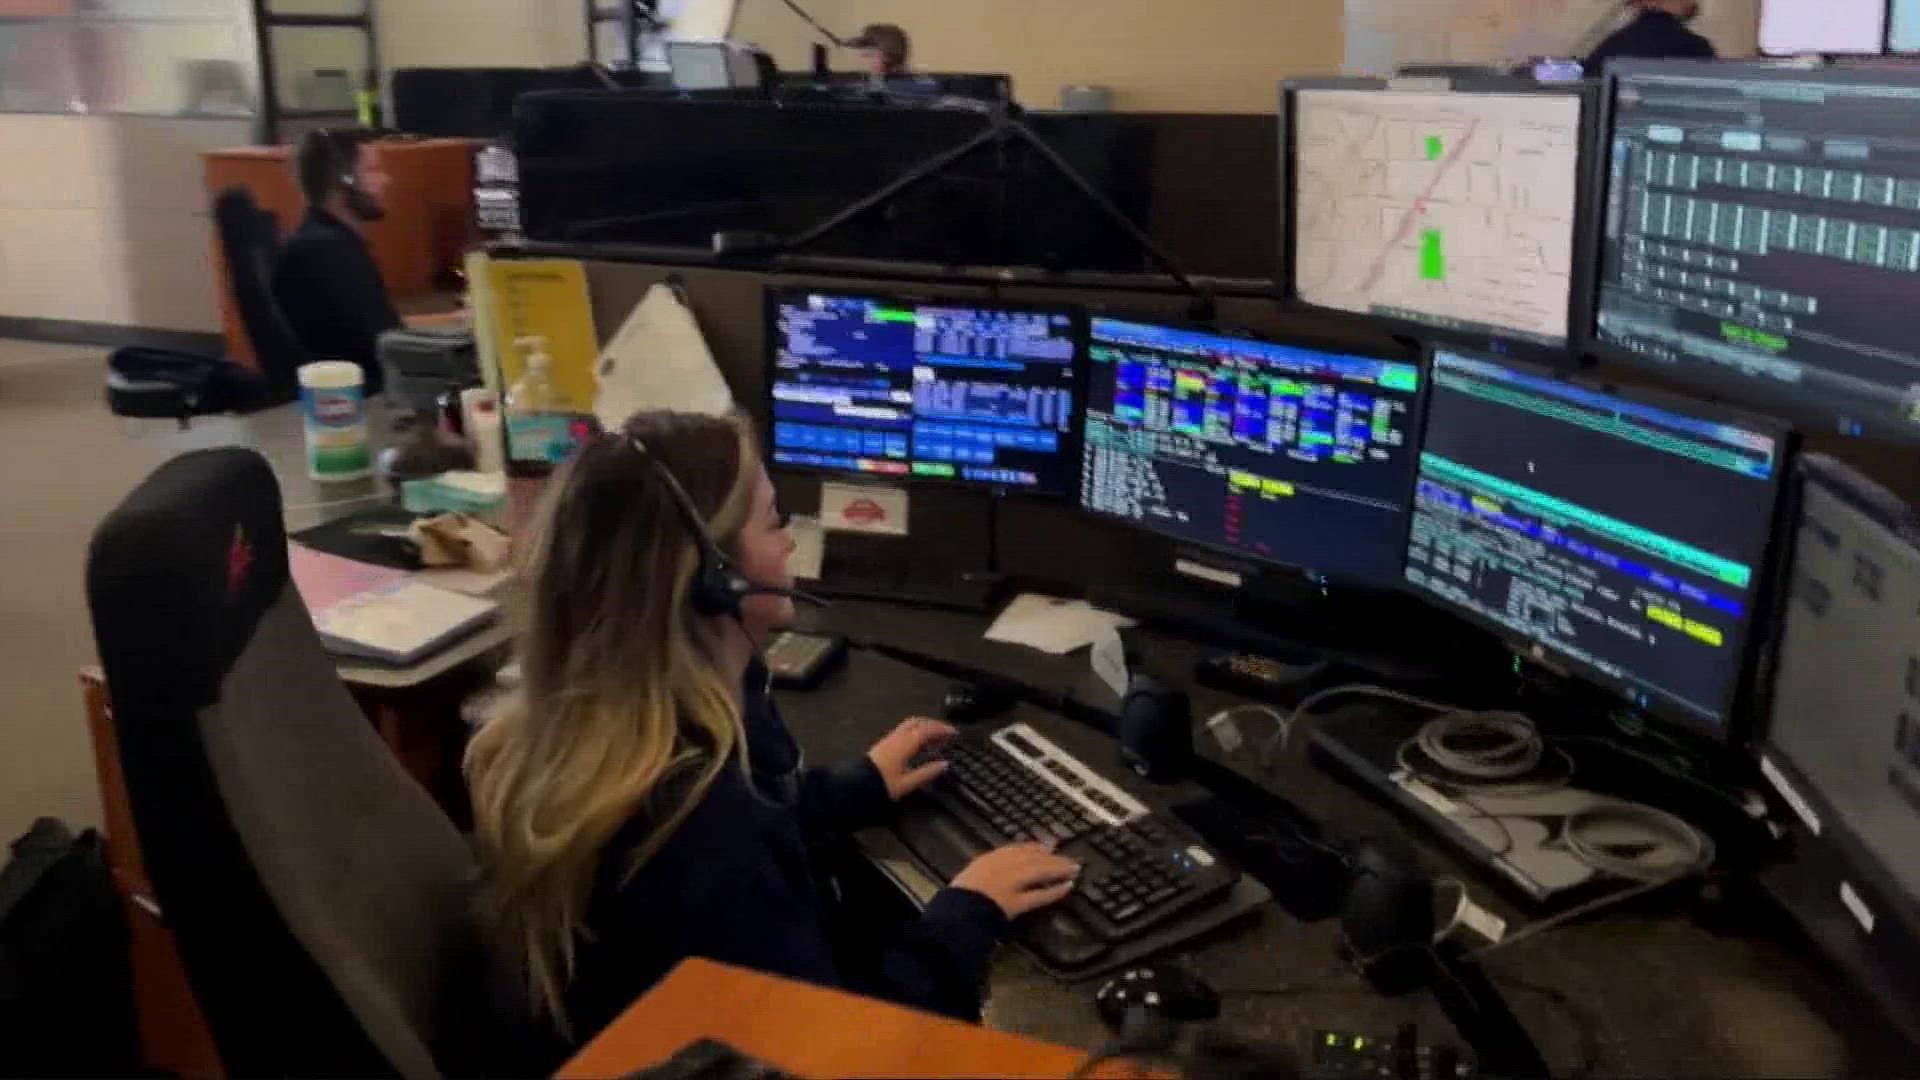 Rancho Cordova houses California's third largest emergency dispatch hub.